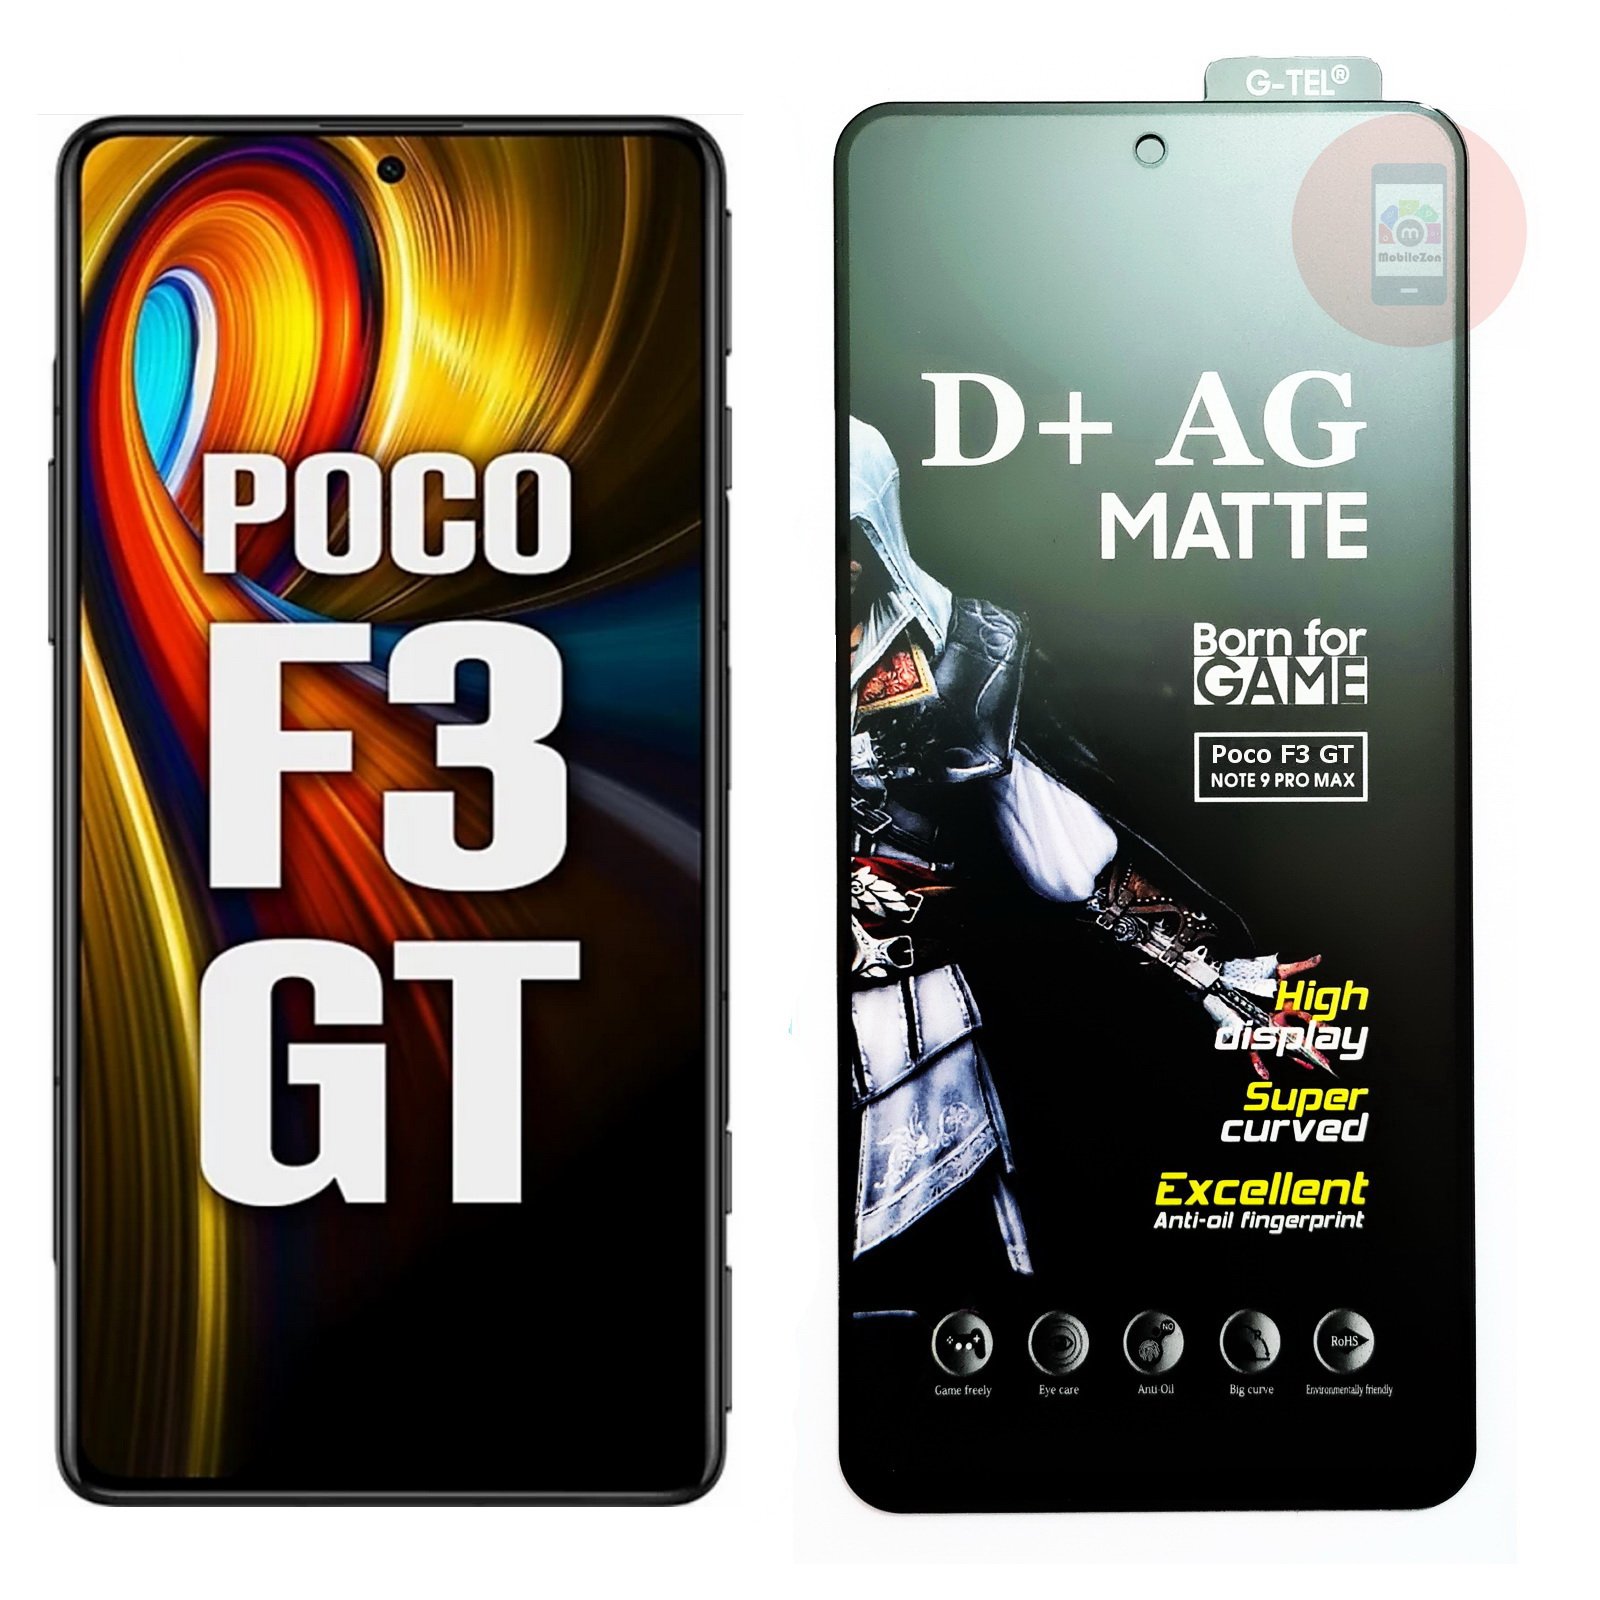 Poco-f3-Gt-matte-tempered-glass